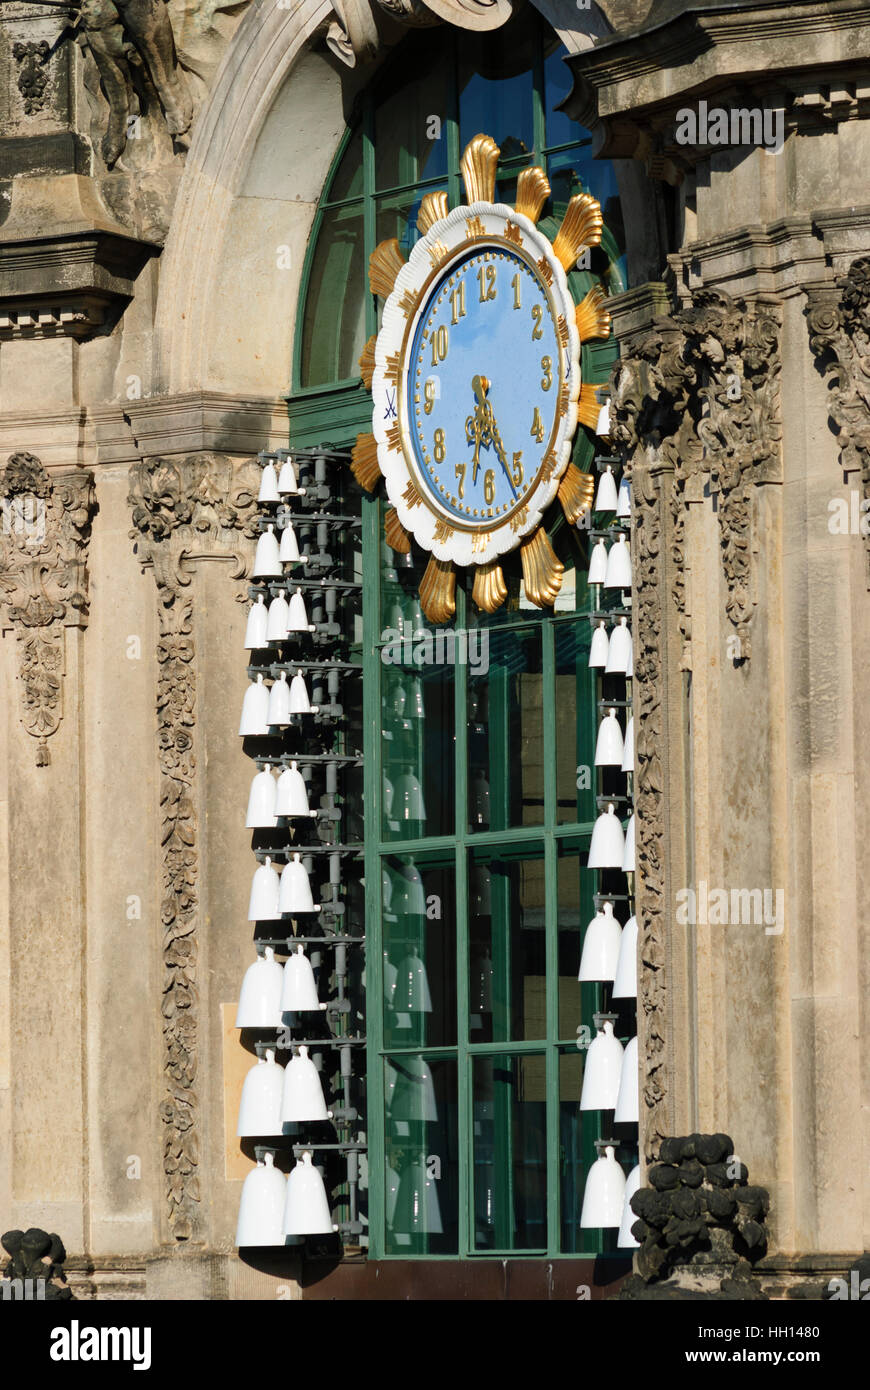 Dresde: Zwinger; Carillon pavilion con campanas de porcelana, Meißener , Sachsen, Sajonia, Alemania Foto de stock